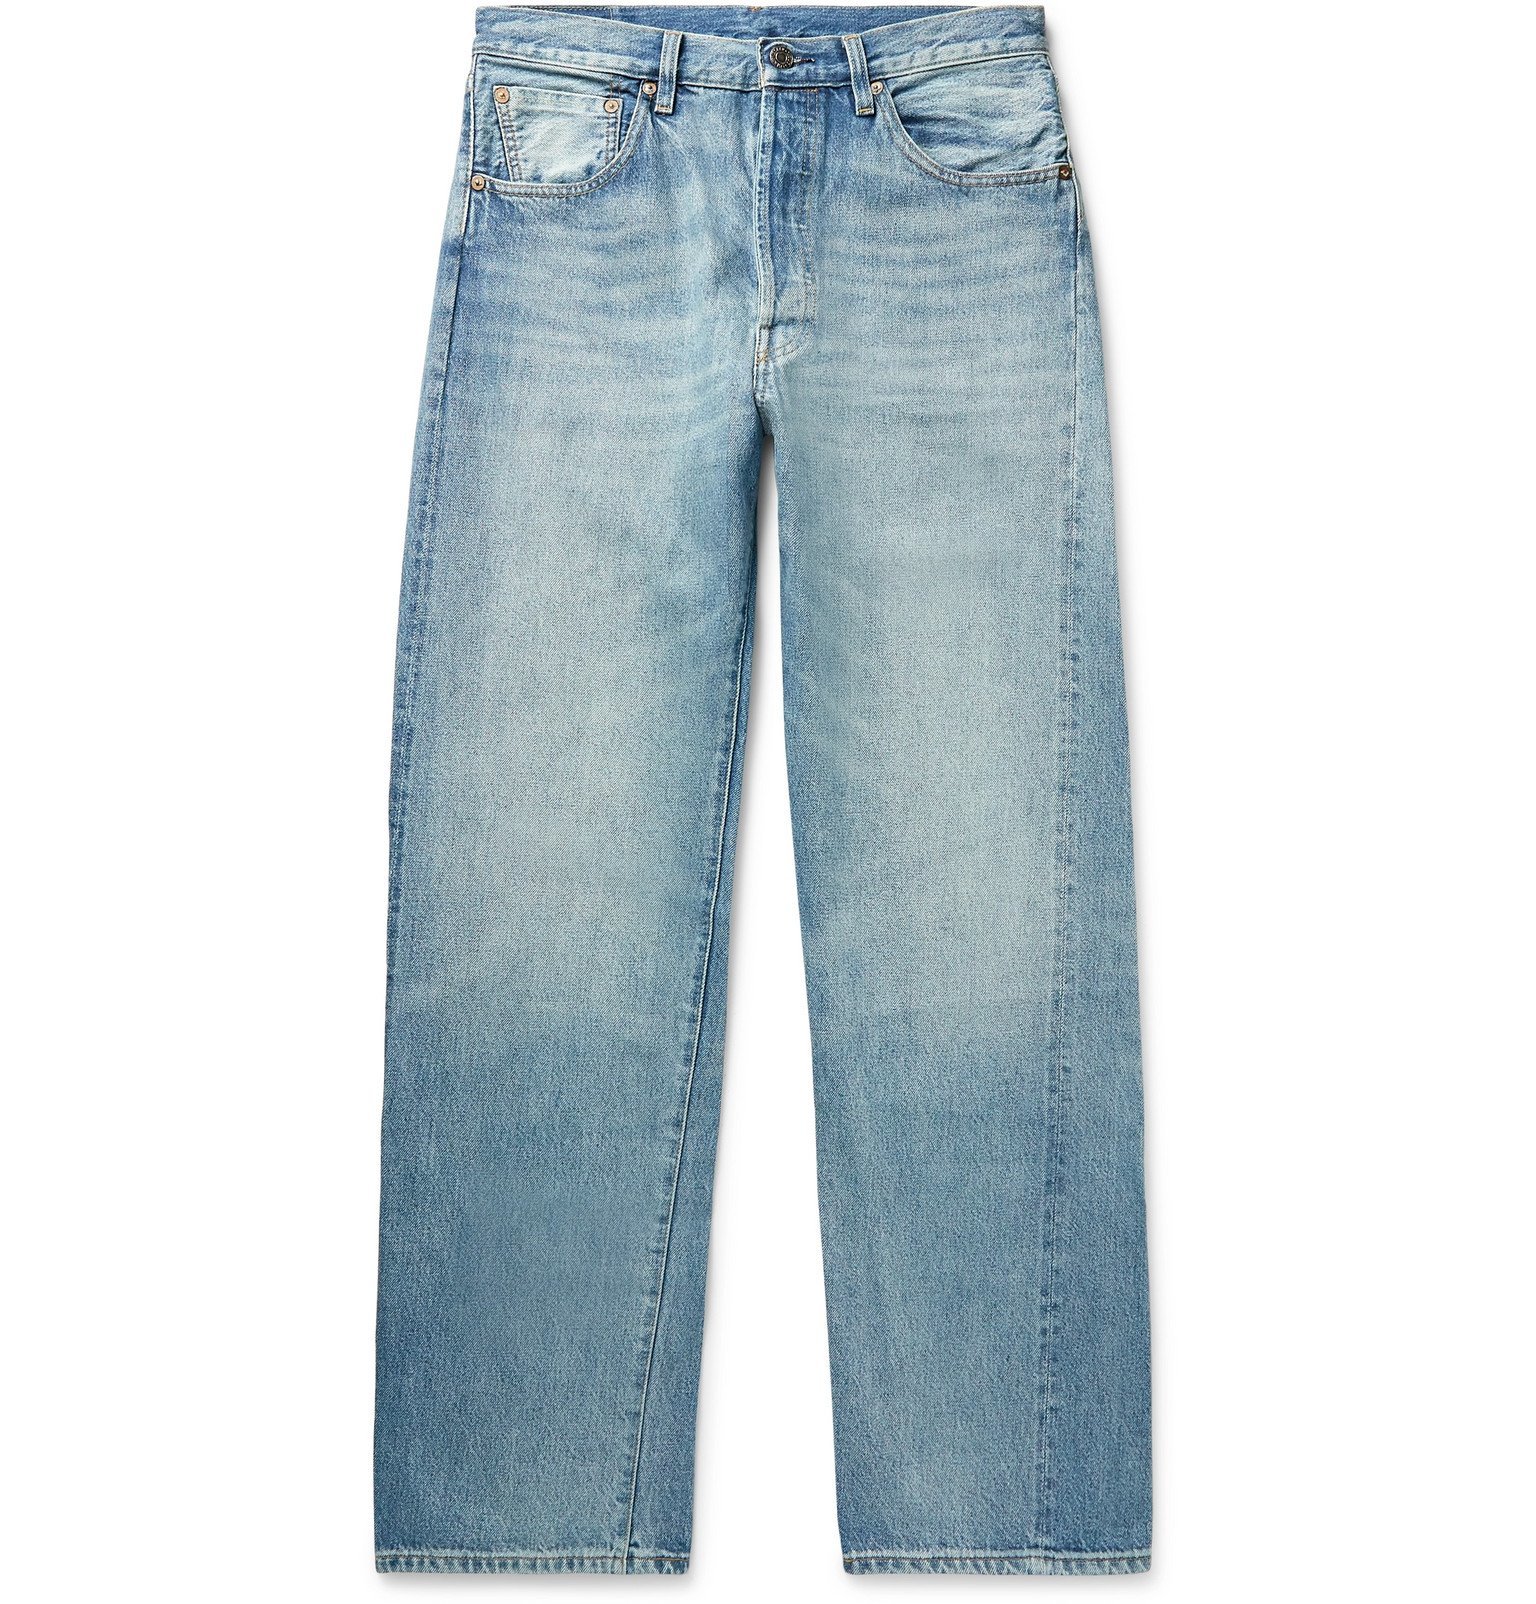 Levi's Vintage Clothing - 1955 501 Original Selvedge Denim Jeans - Blue  Levi's Vintage